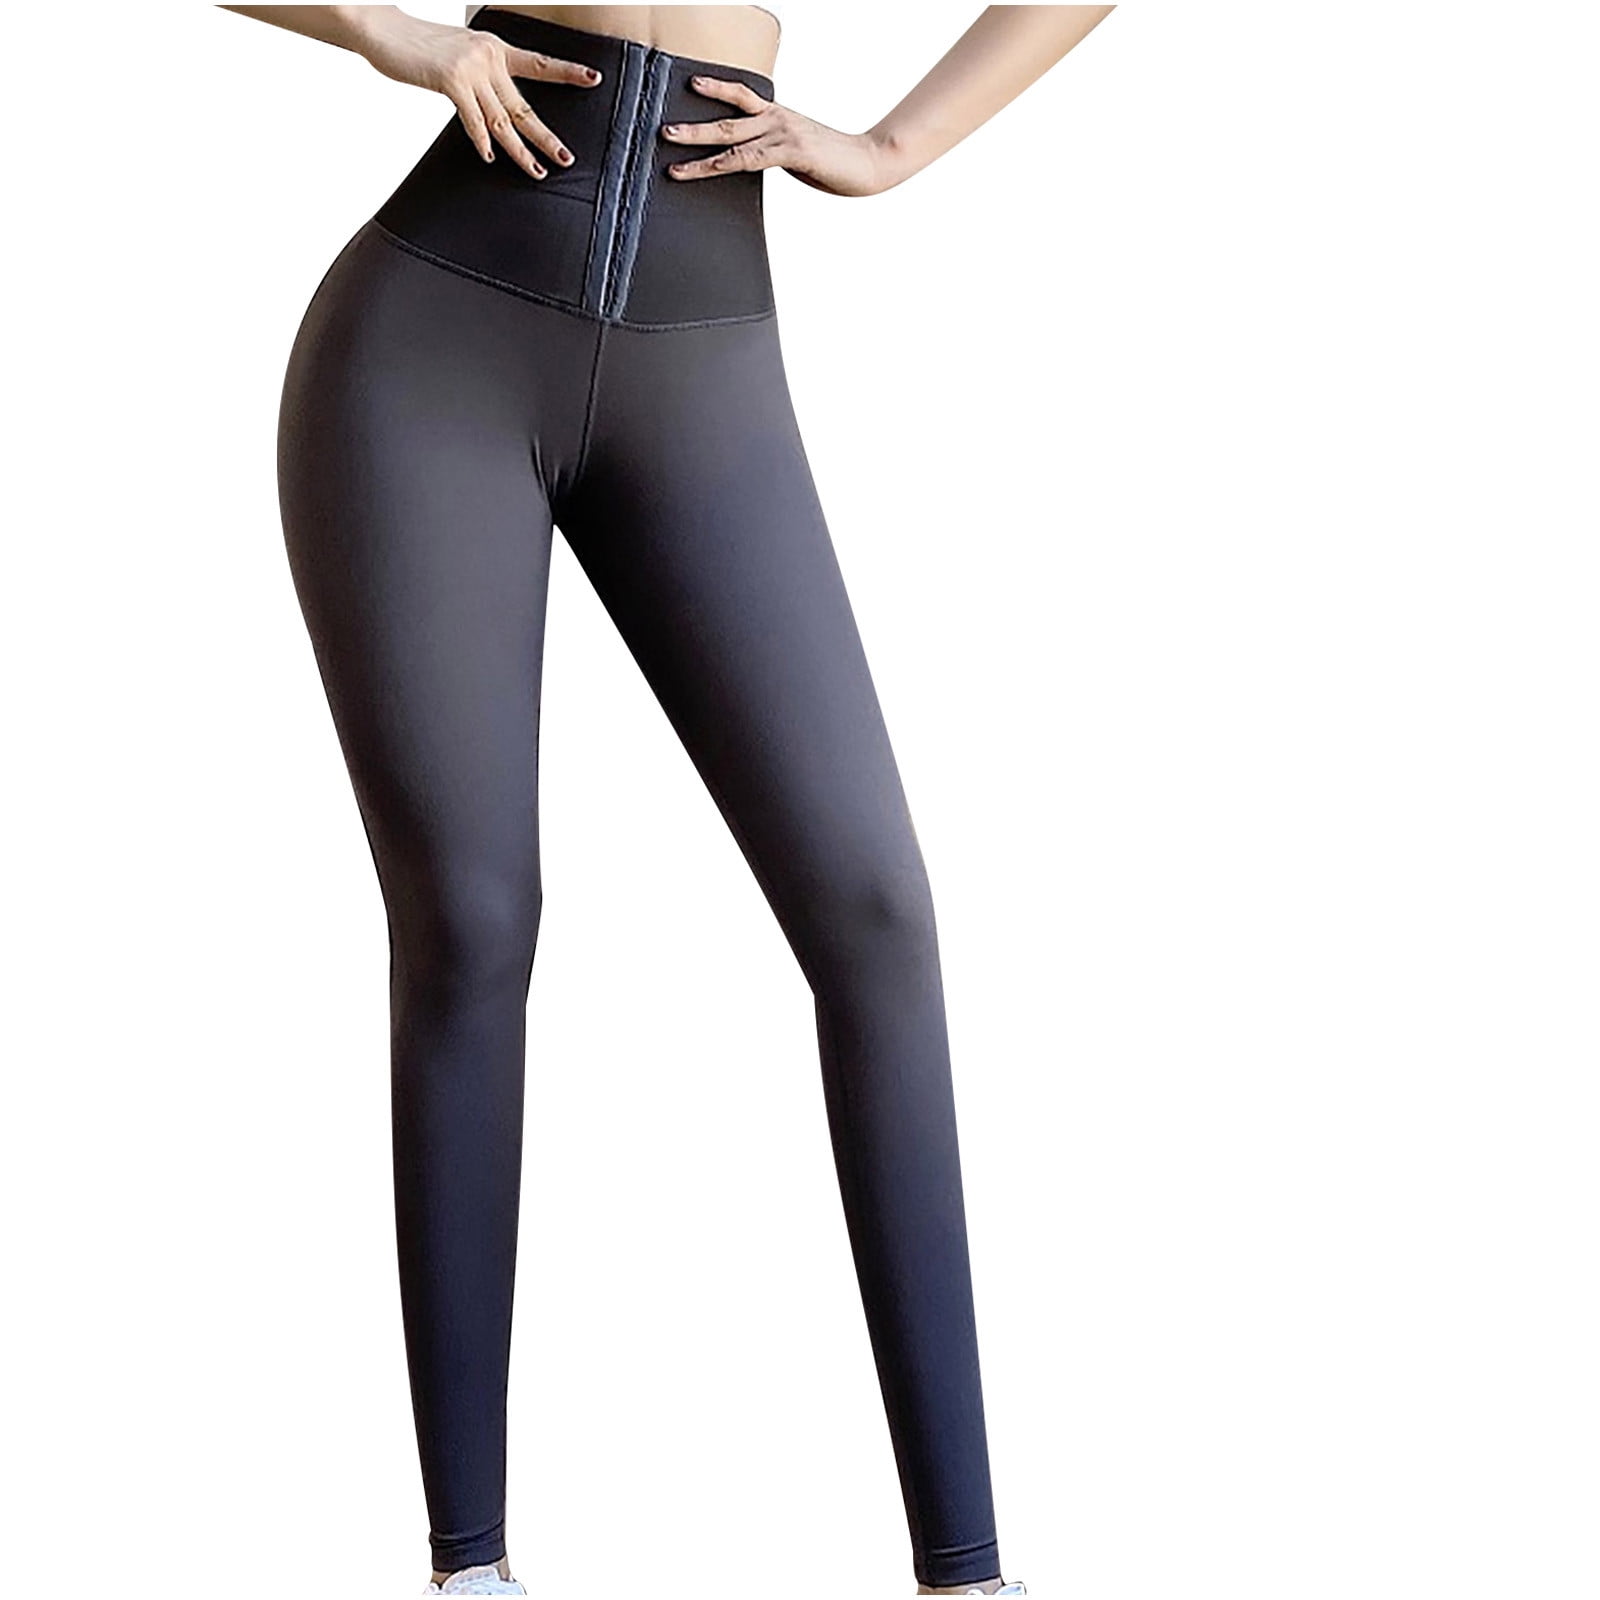 MOOSLOVER Women Corset High Waisted Leggings with Pockets Tummy Control  Body Shaper Yoga Pants, #1 Black-871, XL price in UAE,  UAE